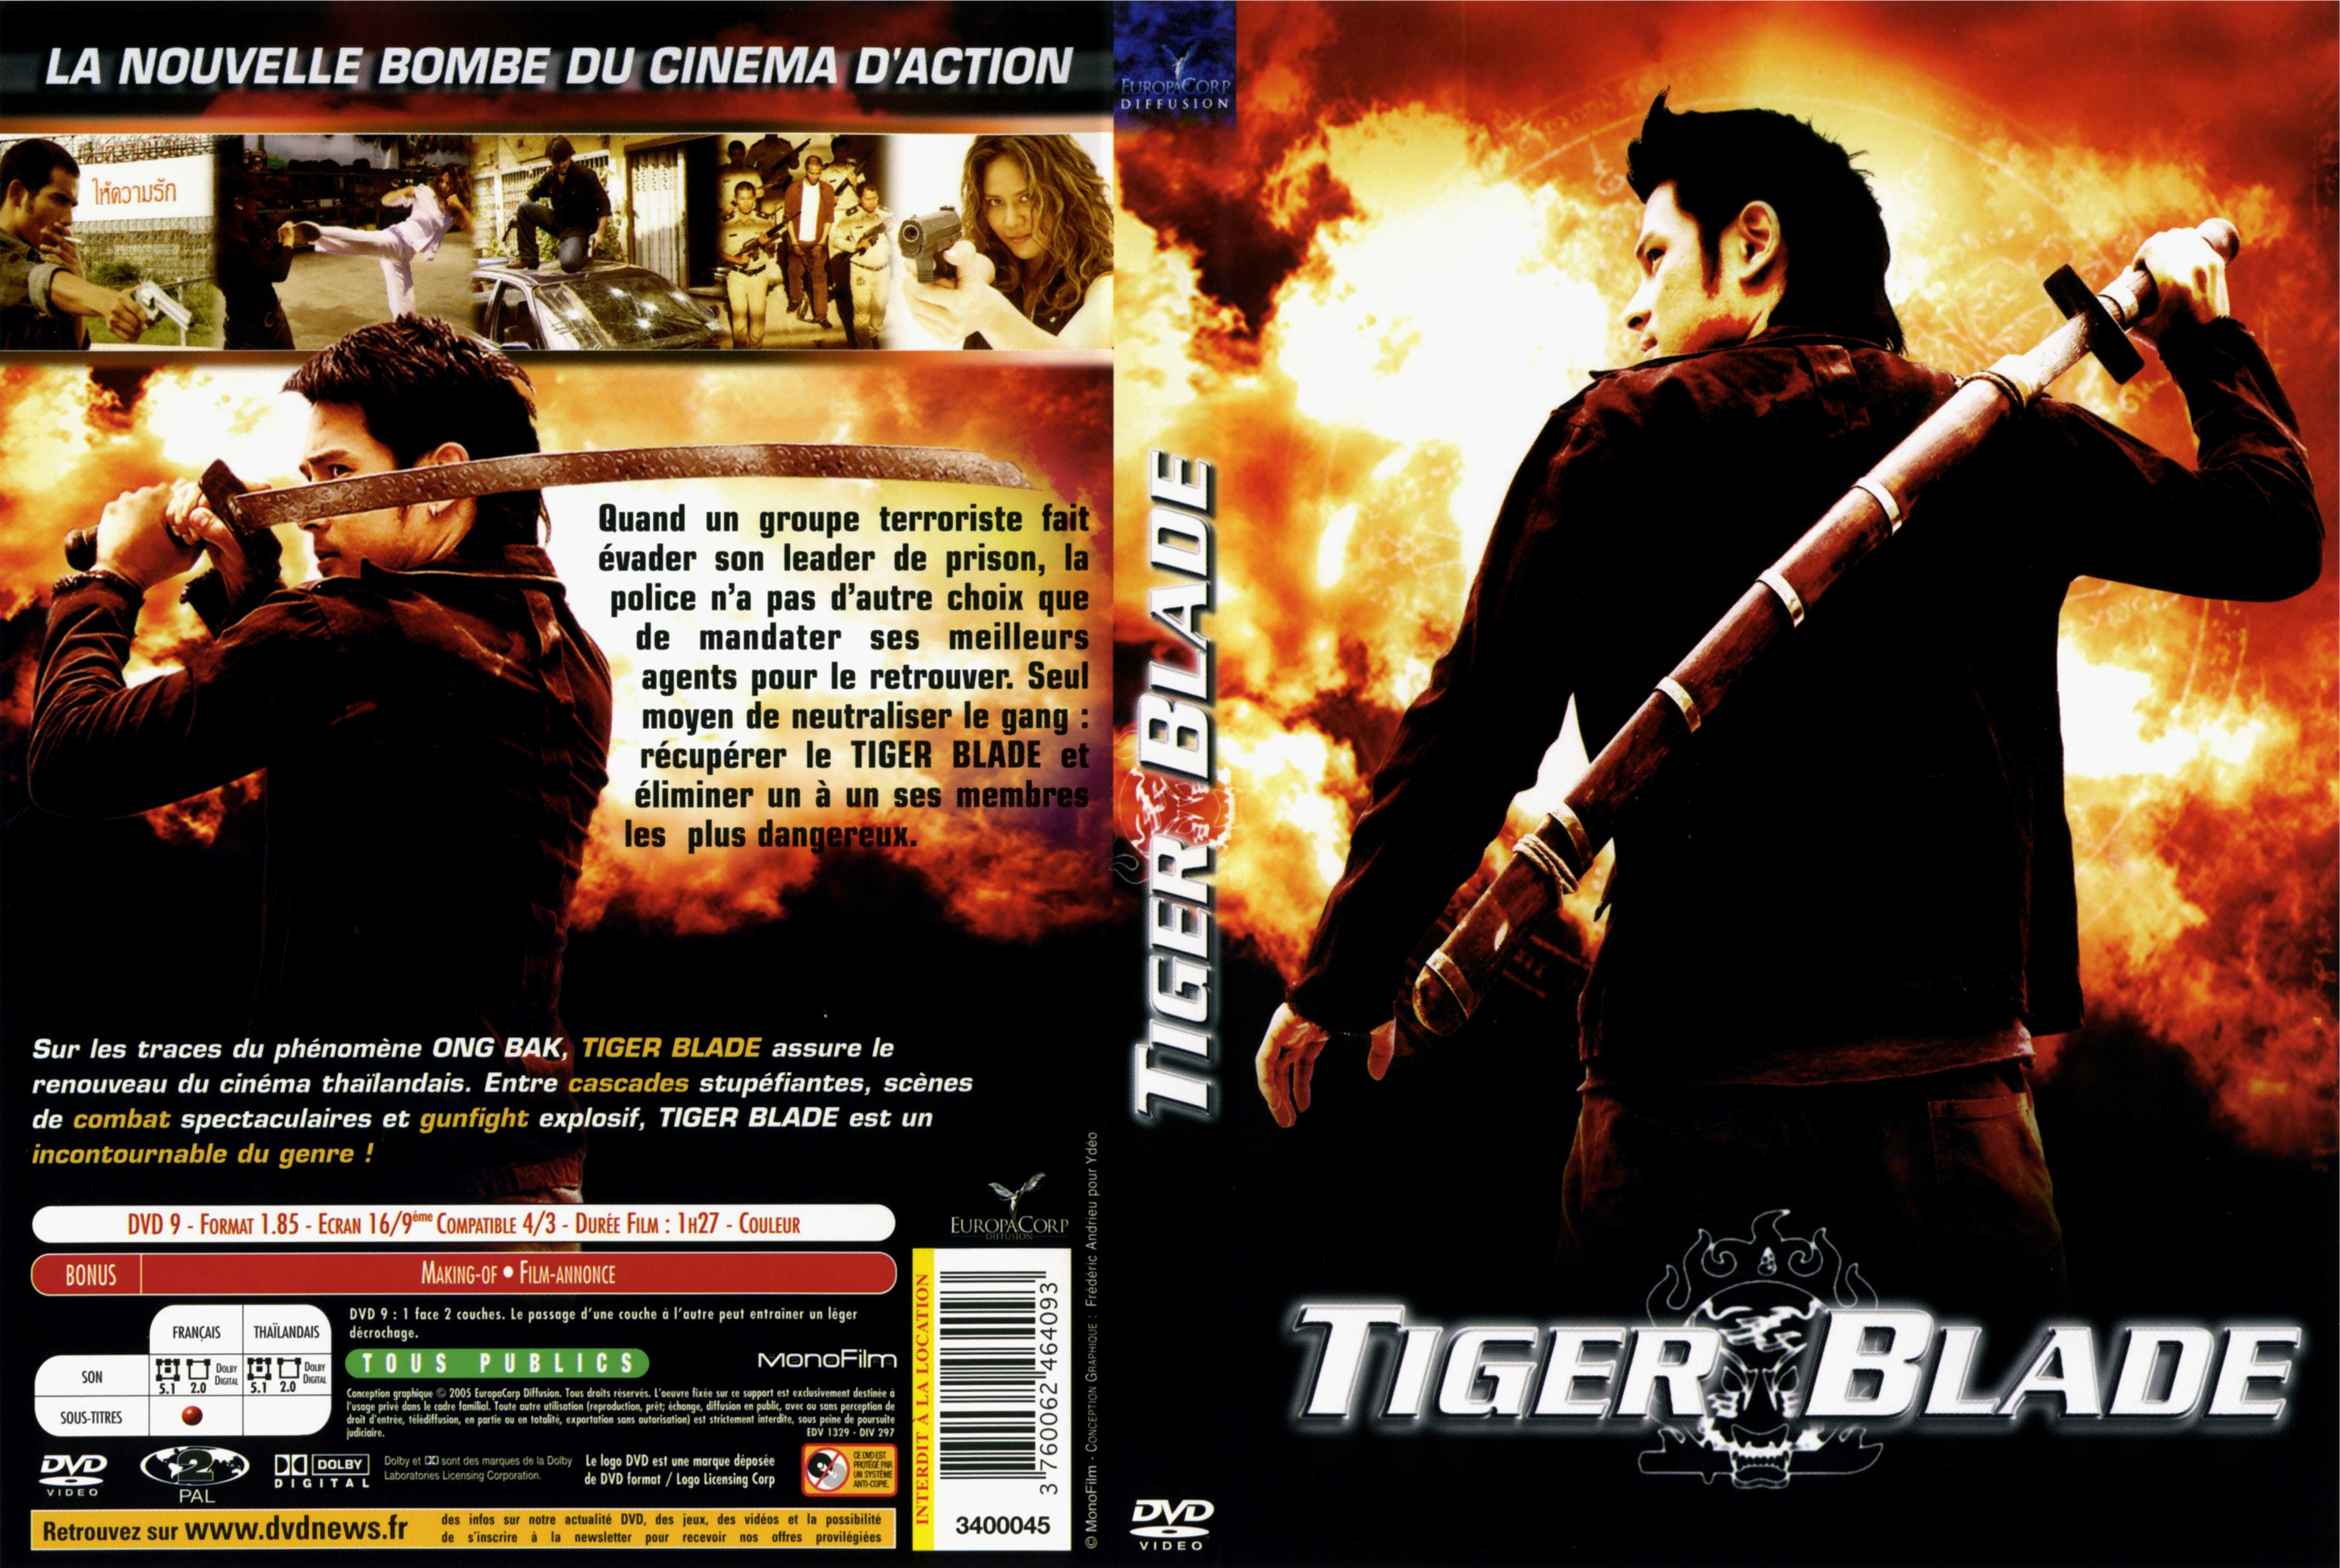 Jaquette DVD Tiger blade